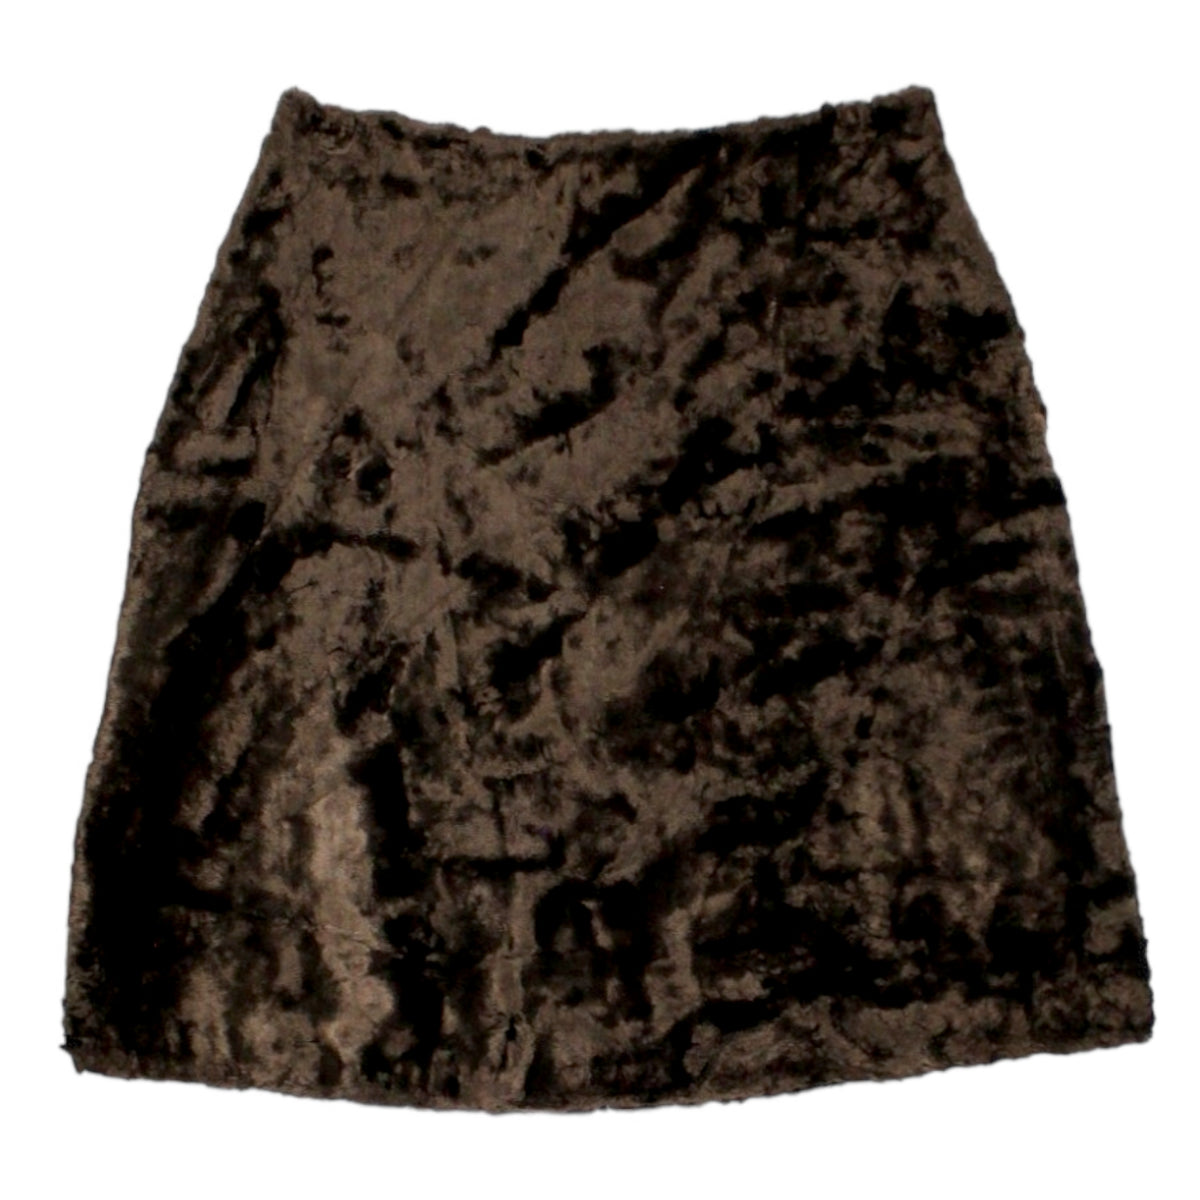 Orla Kiely Chocolate Furry Skirt